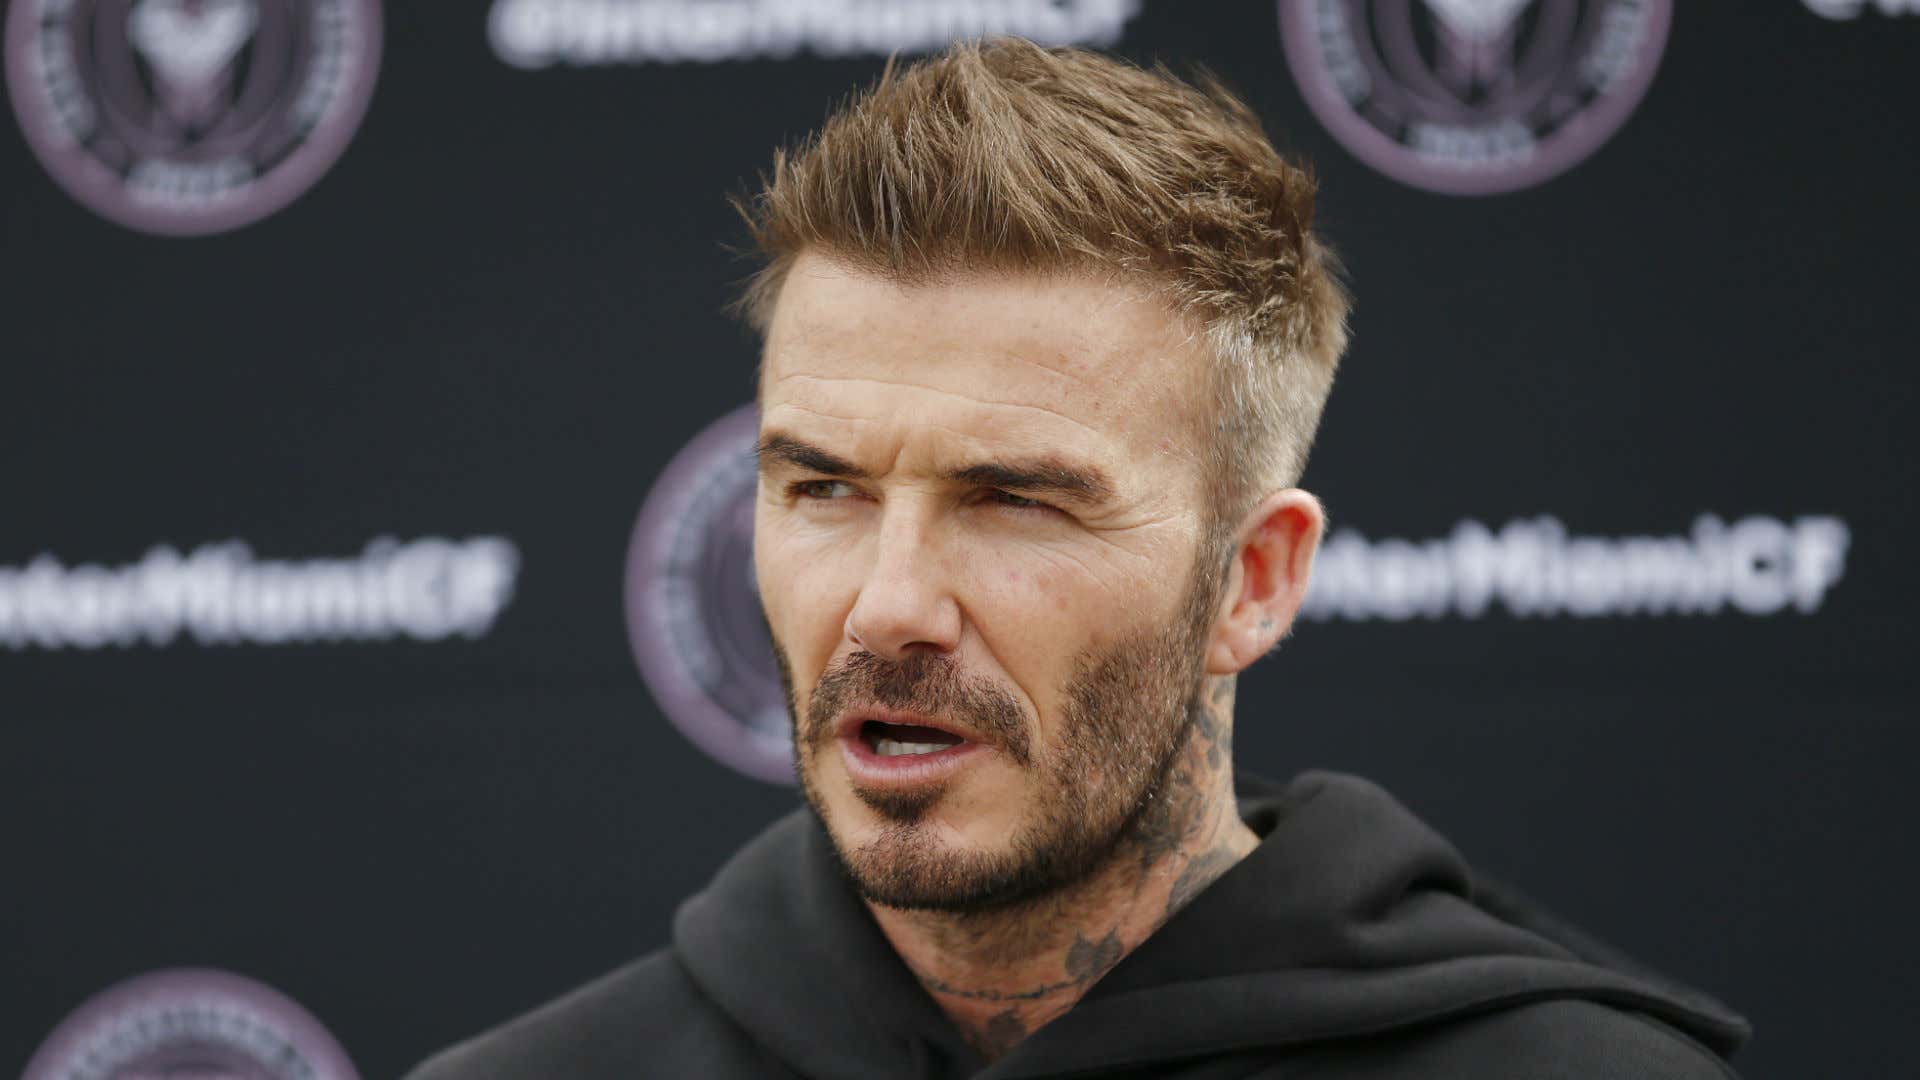 Beckham Inter Miami 2020